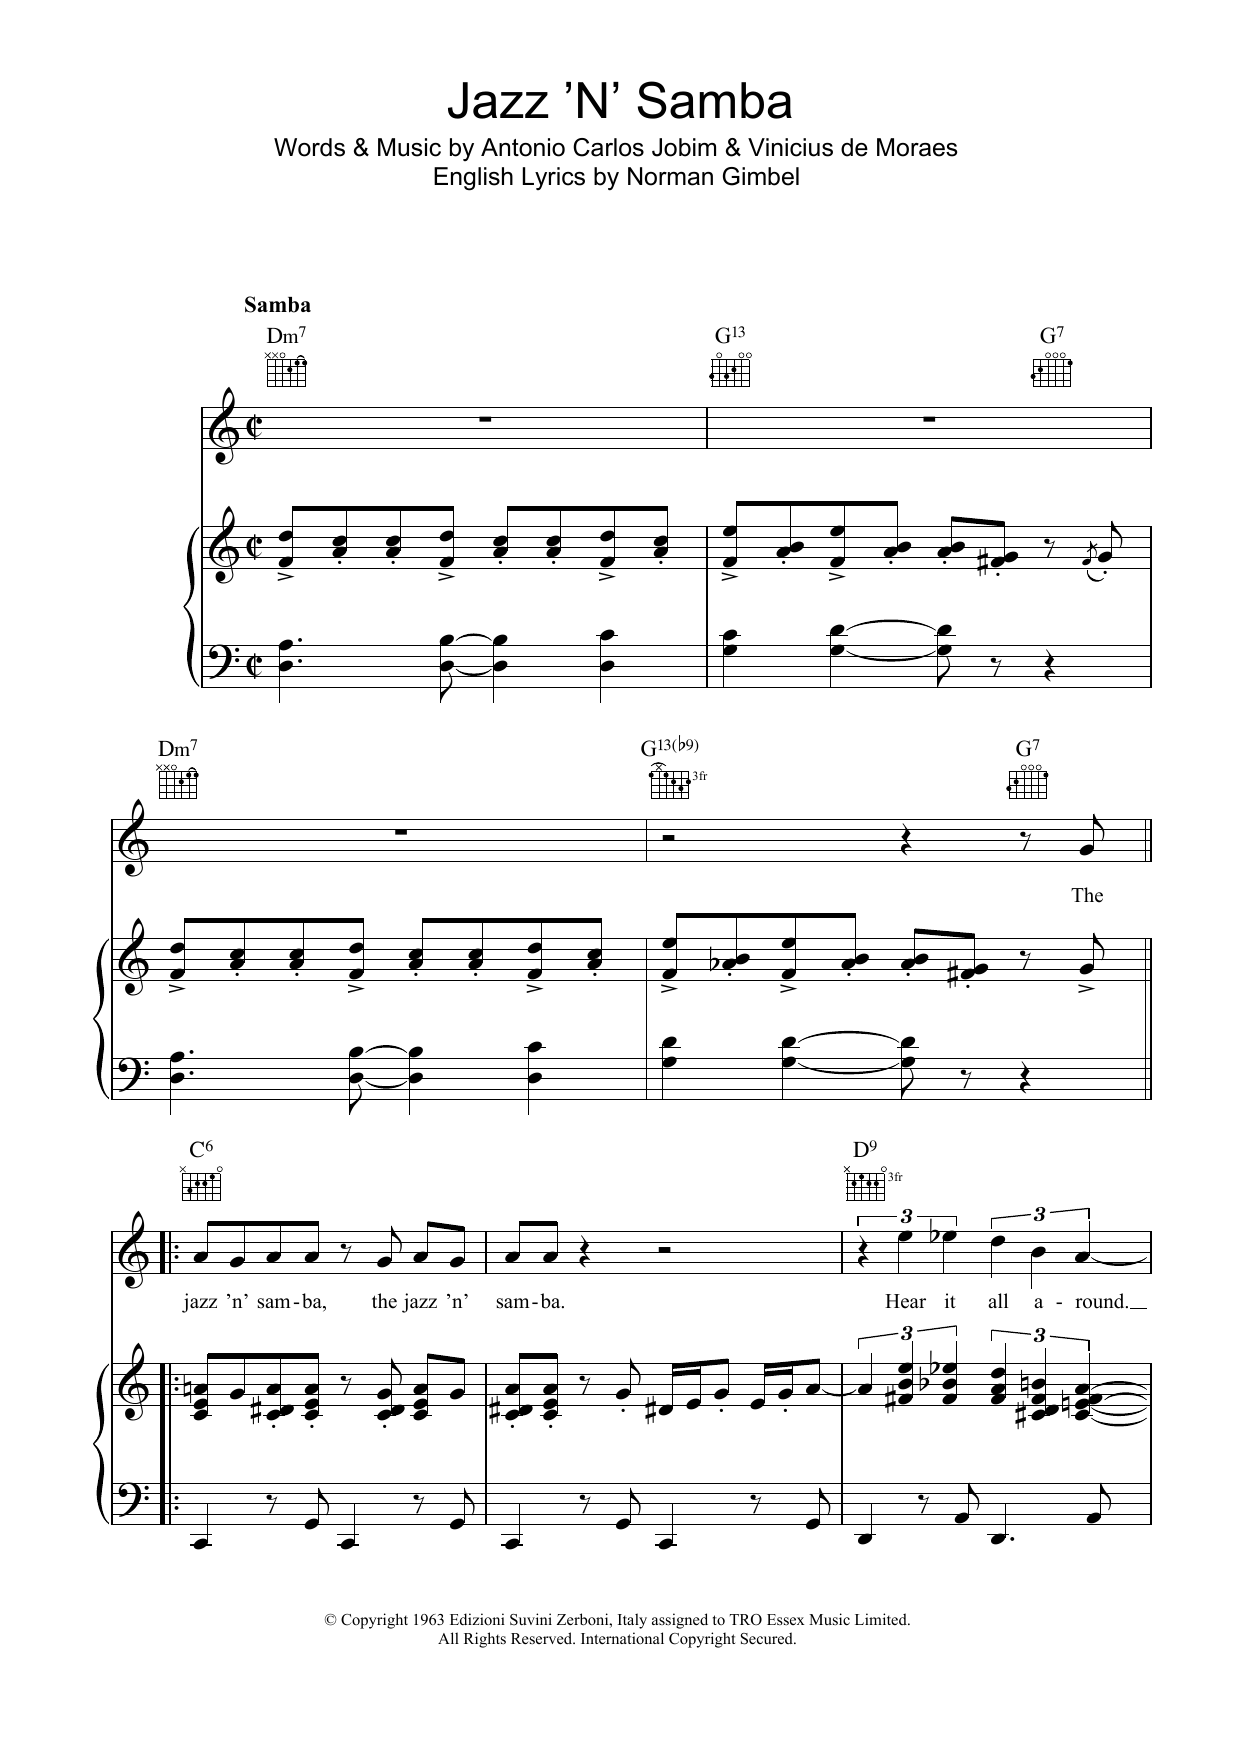 Download Antonio Carlos Jobim Jazz 'N' Samba (So Danco Samba) Sheet Music and learn how to play Melody Line, Lyrics & Chords PDF digital score in minutes